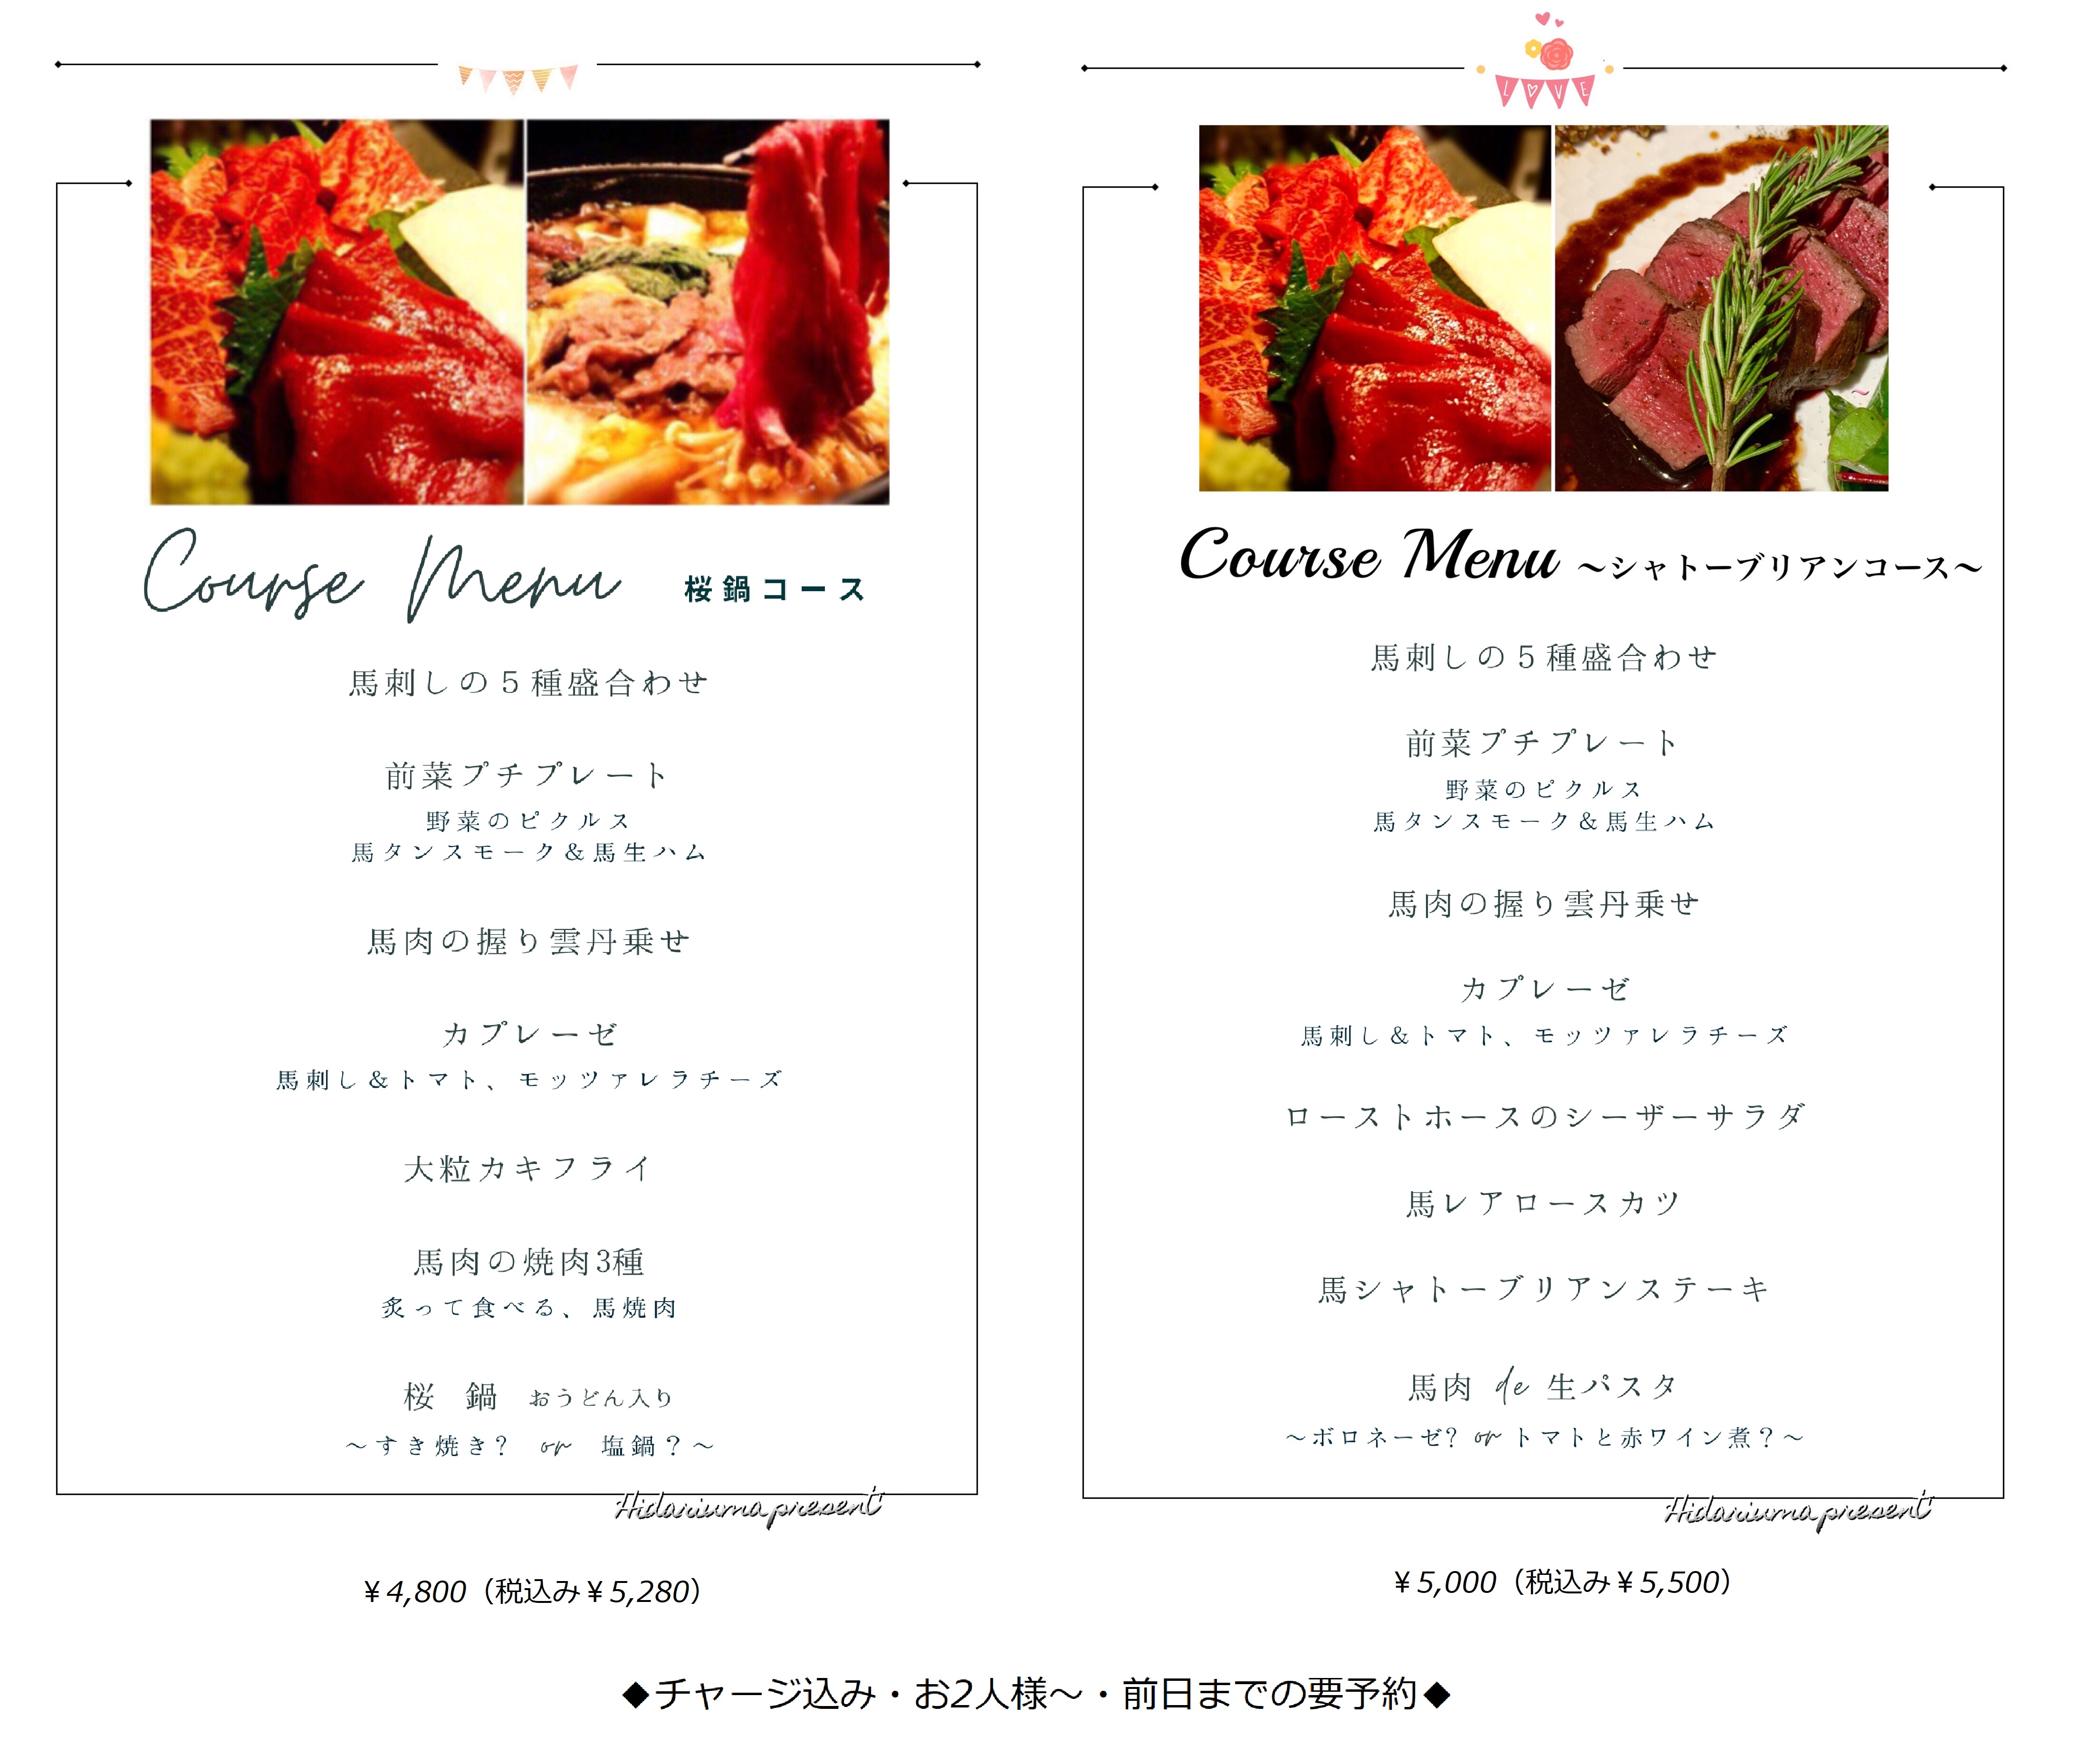 HIDARIUMA〜選べるコース、桜鍋コース、シャトーブリアンステーキコース